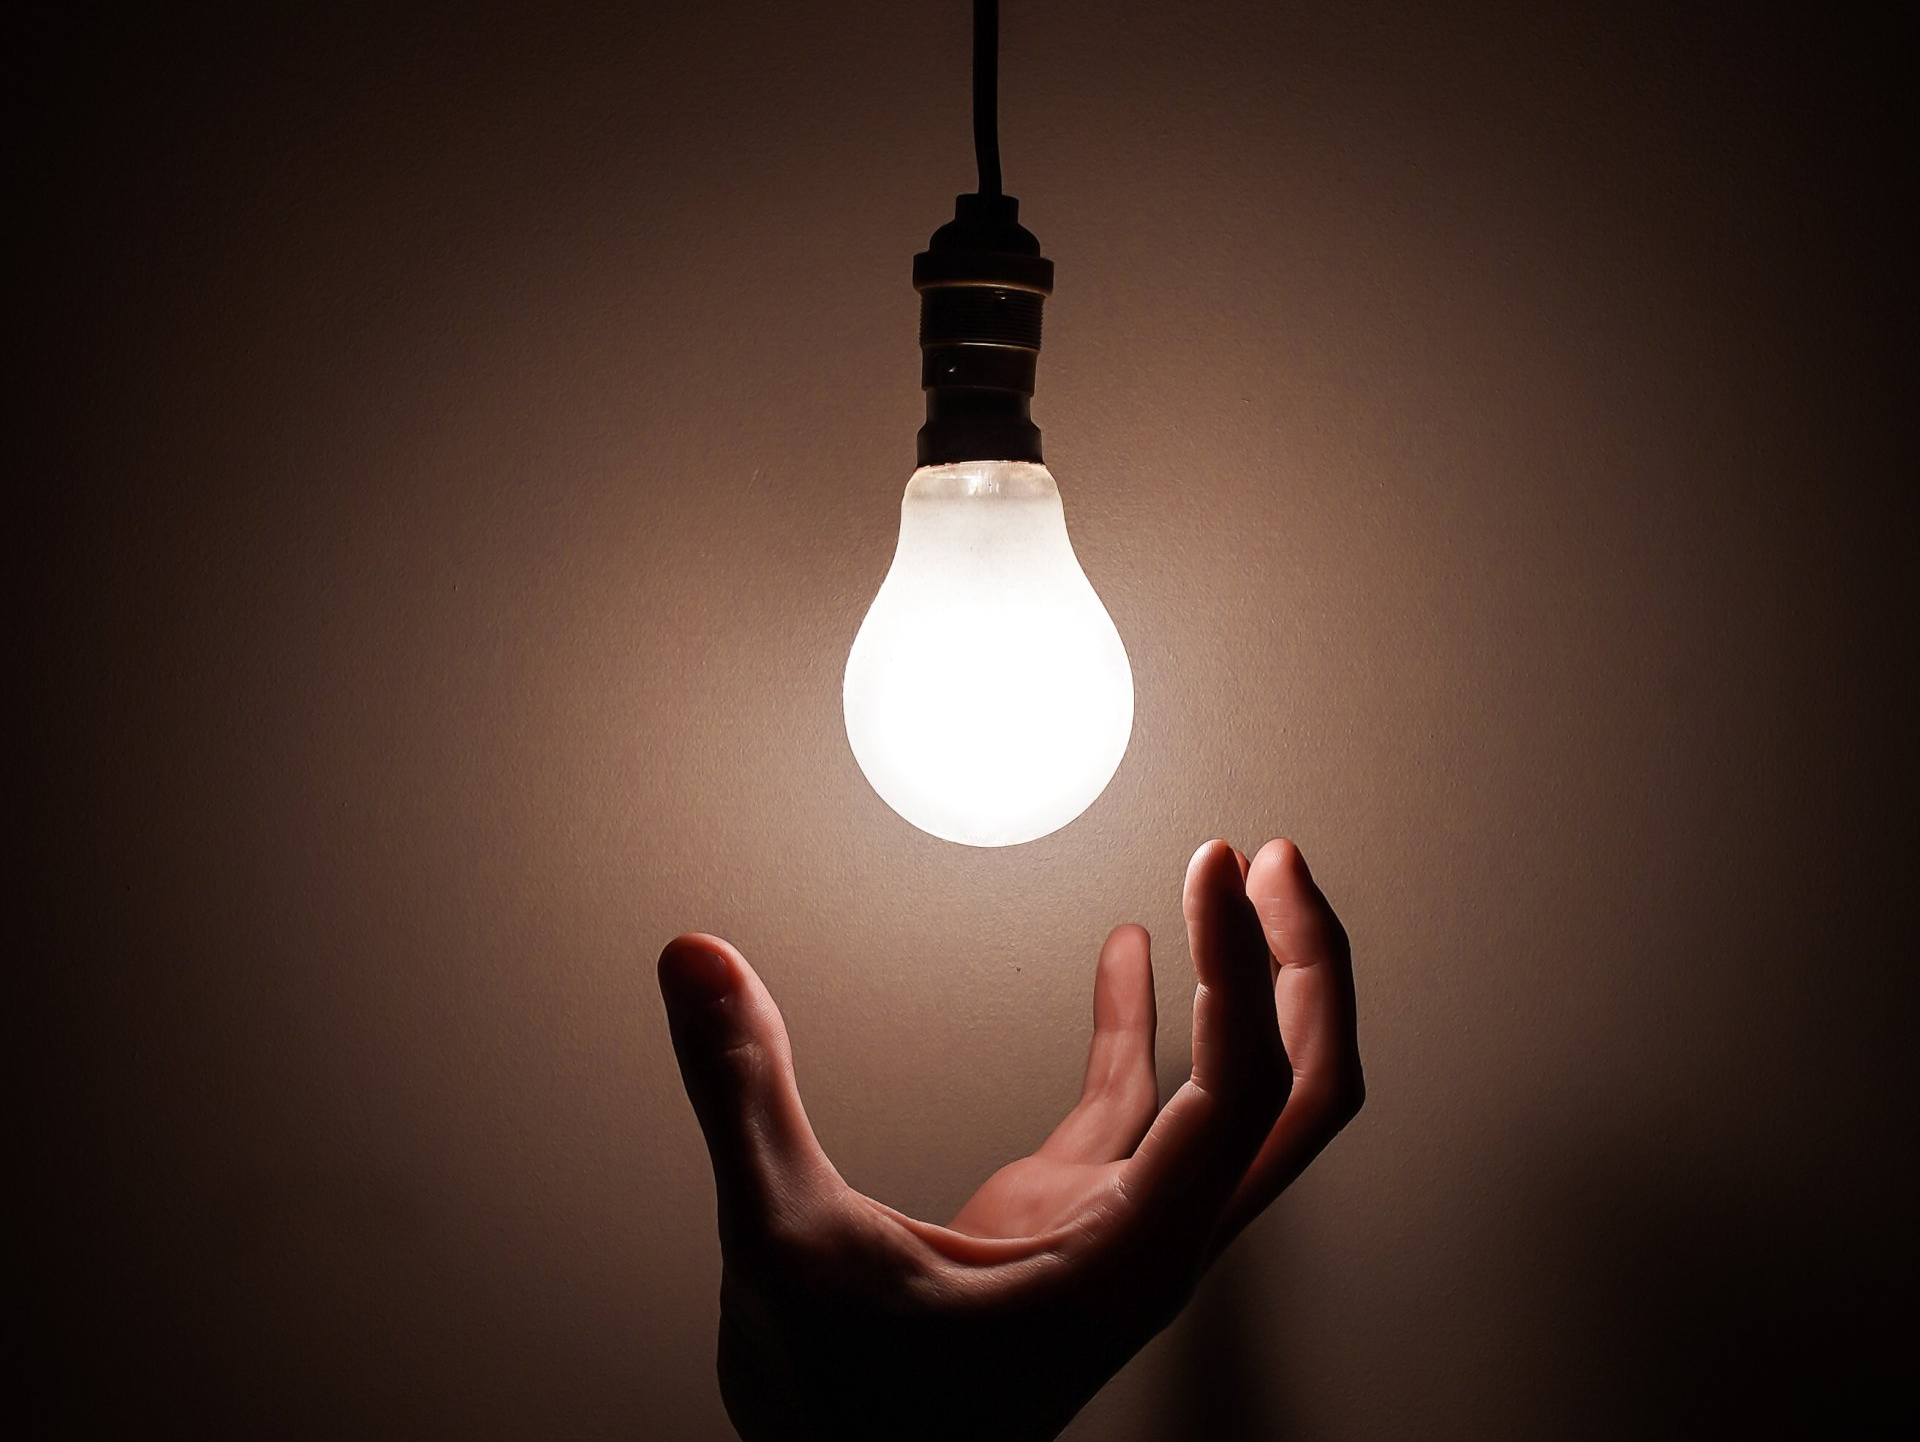 Hand turning on light bulb